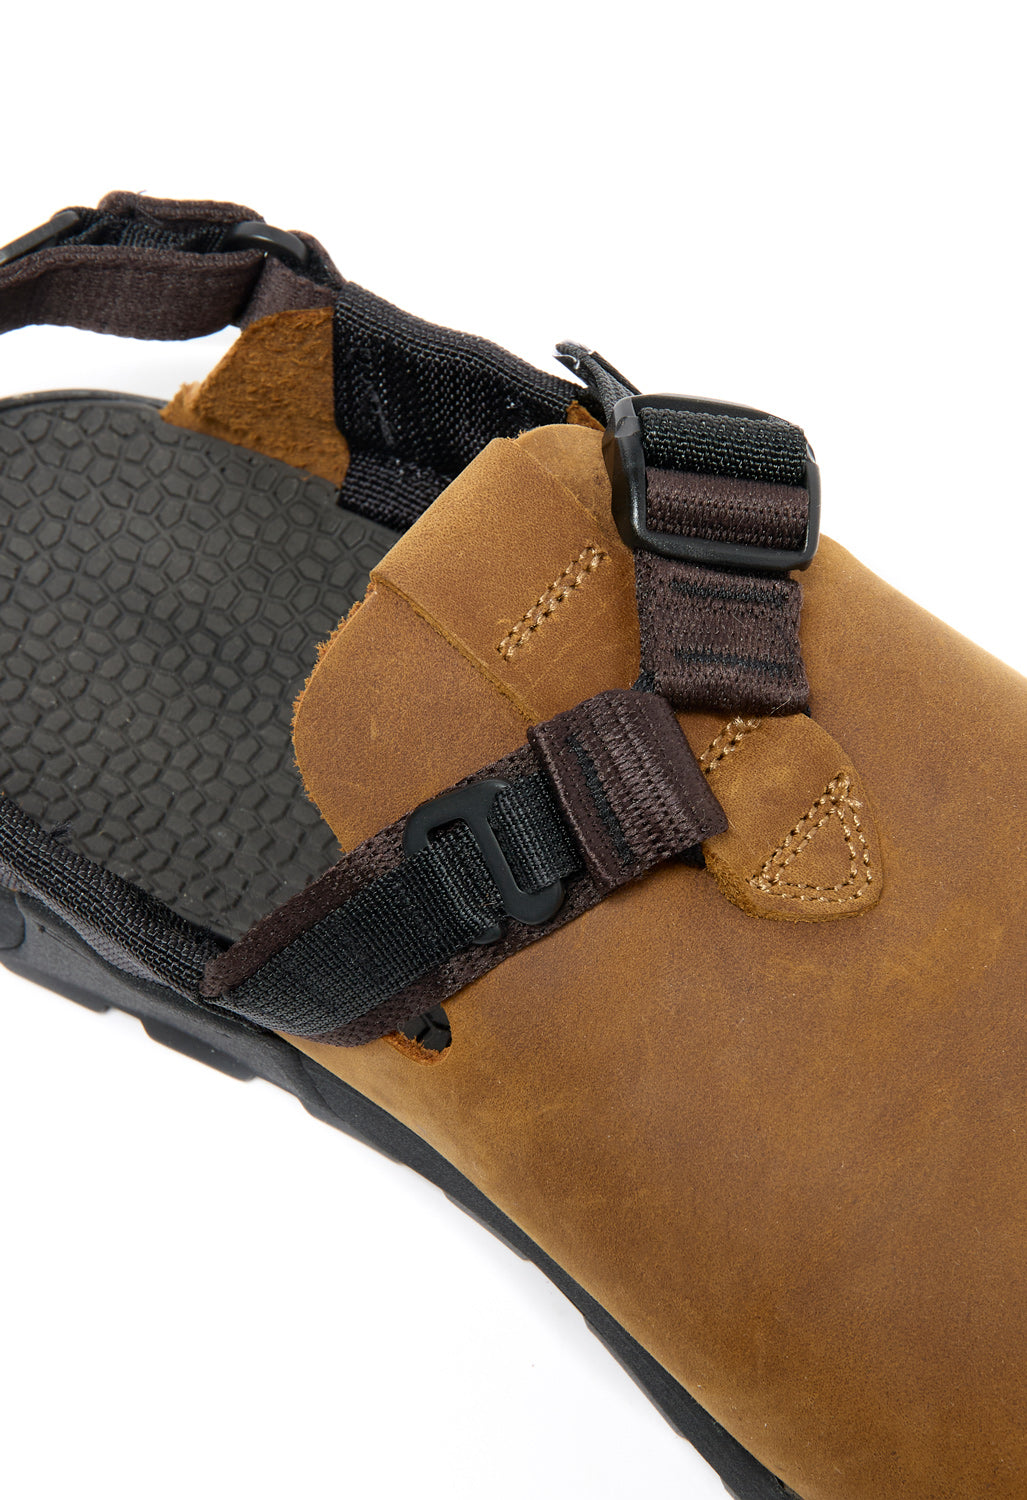 Bedrock Sandals Mountain Clog - Brown Nubuck Leather